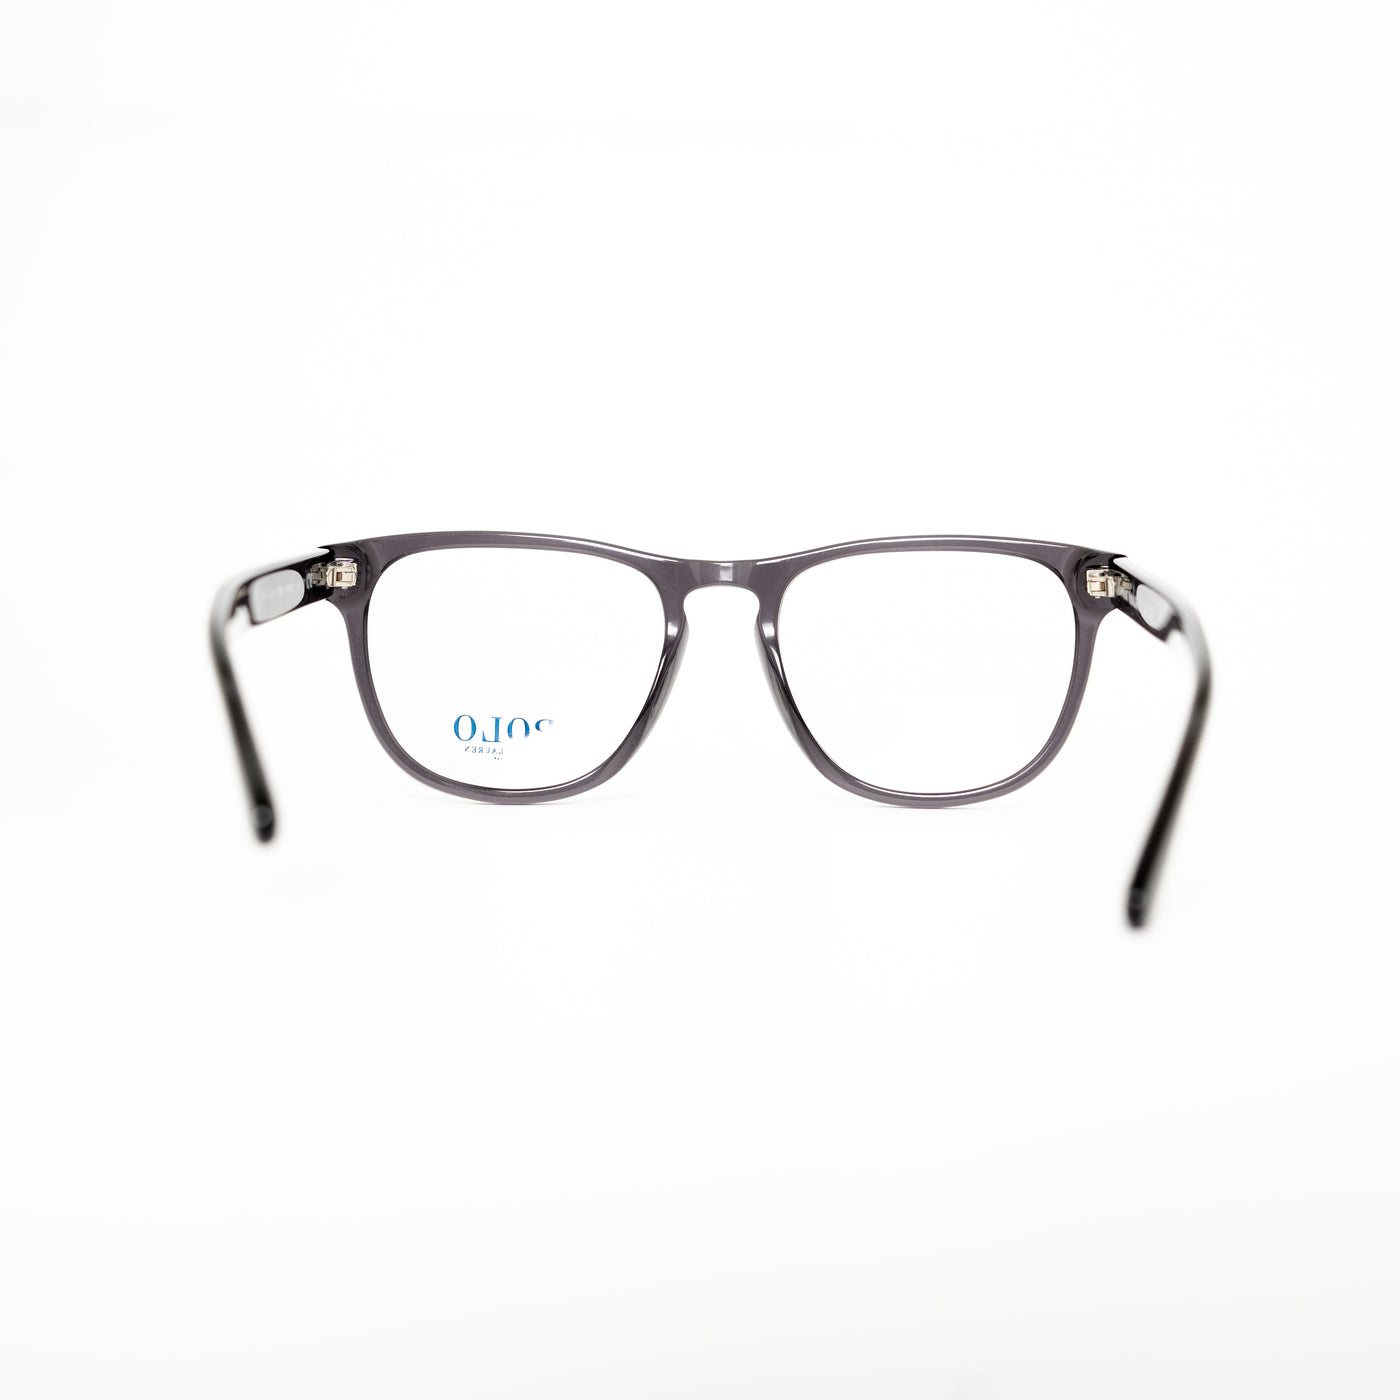 Polo Eyeglasses | PH2206/5320 - Vision Express Optical Philippines